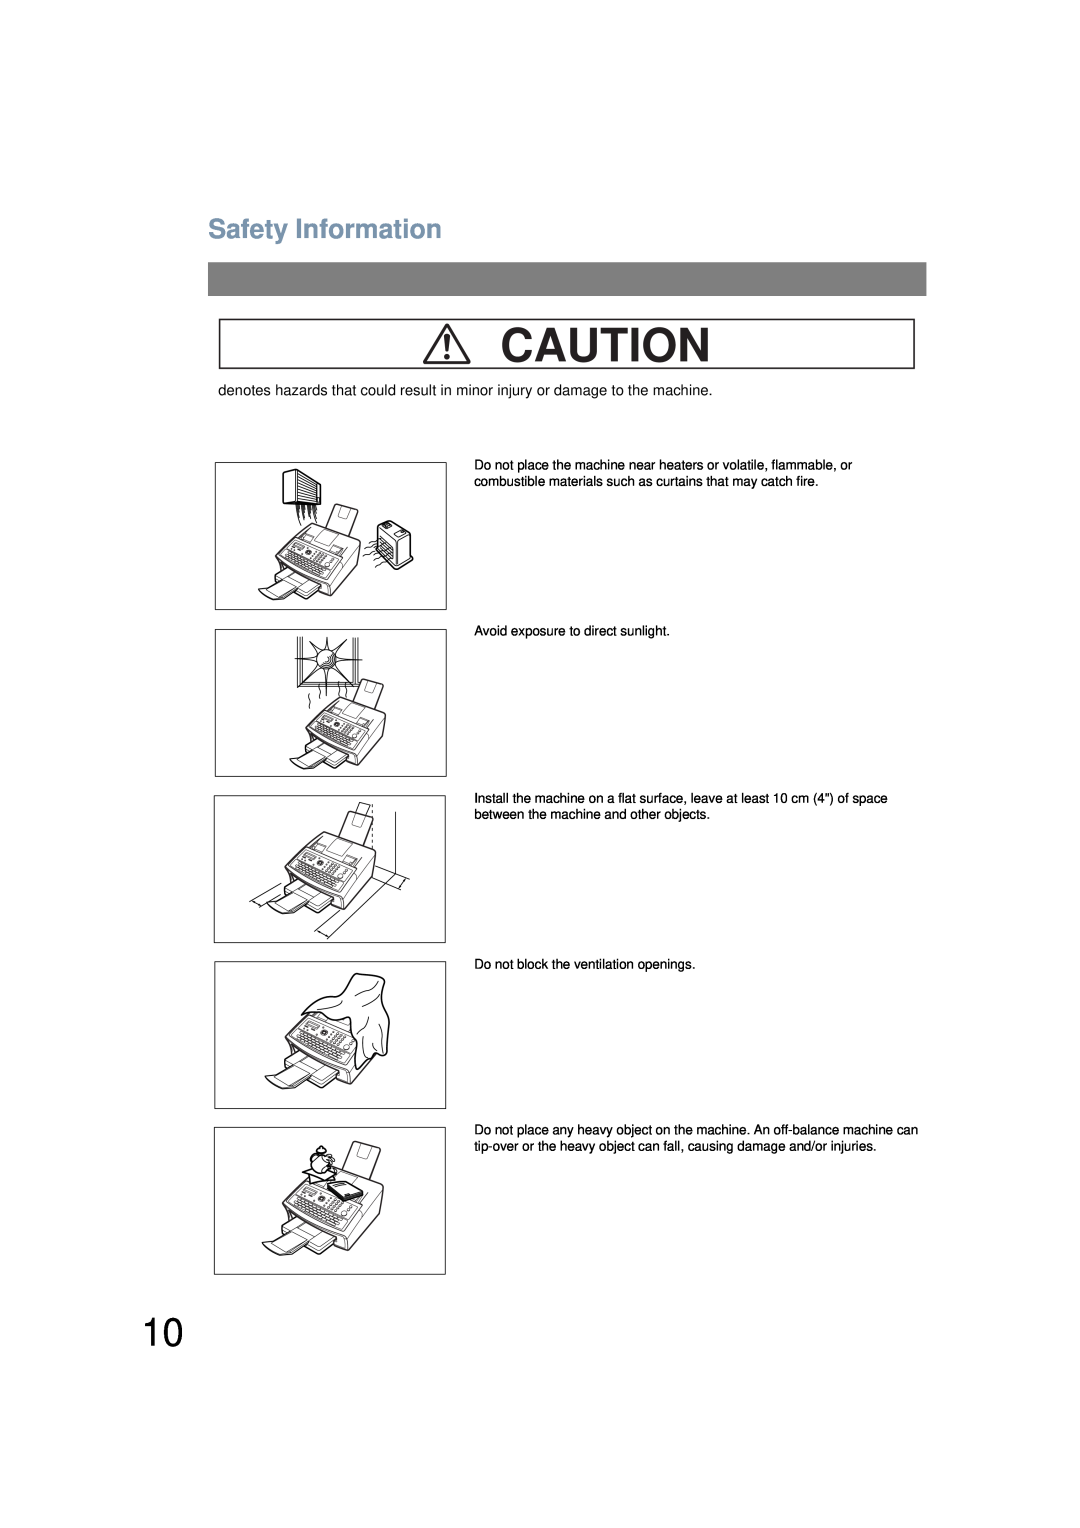 Panasonic UF-6200 operating instructions Safety Information, Avoid exposure to direct sunlight 